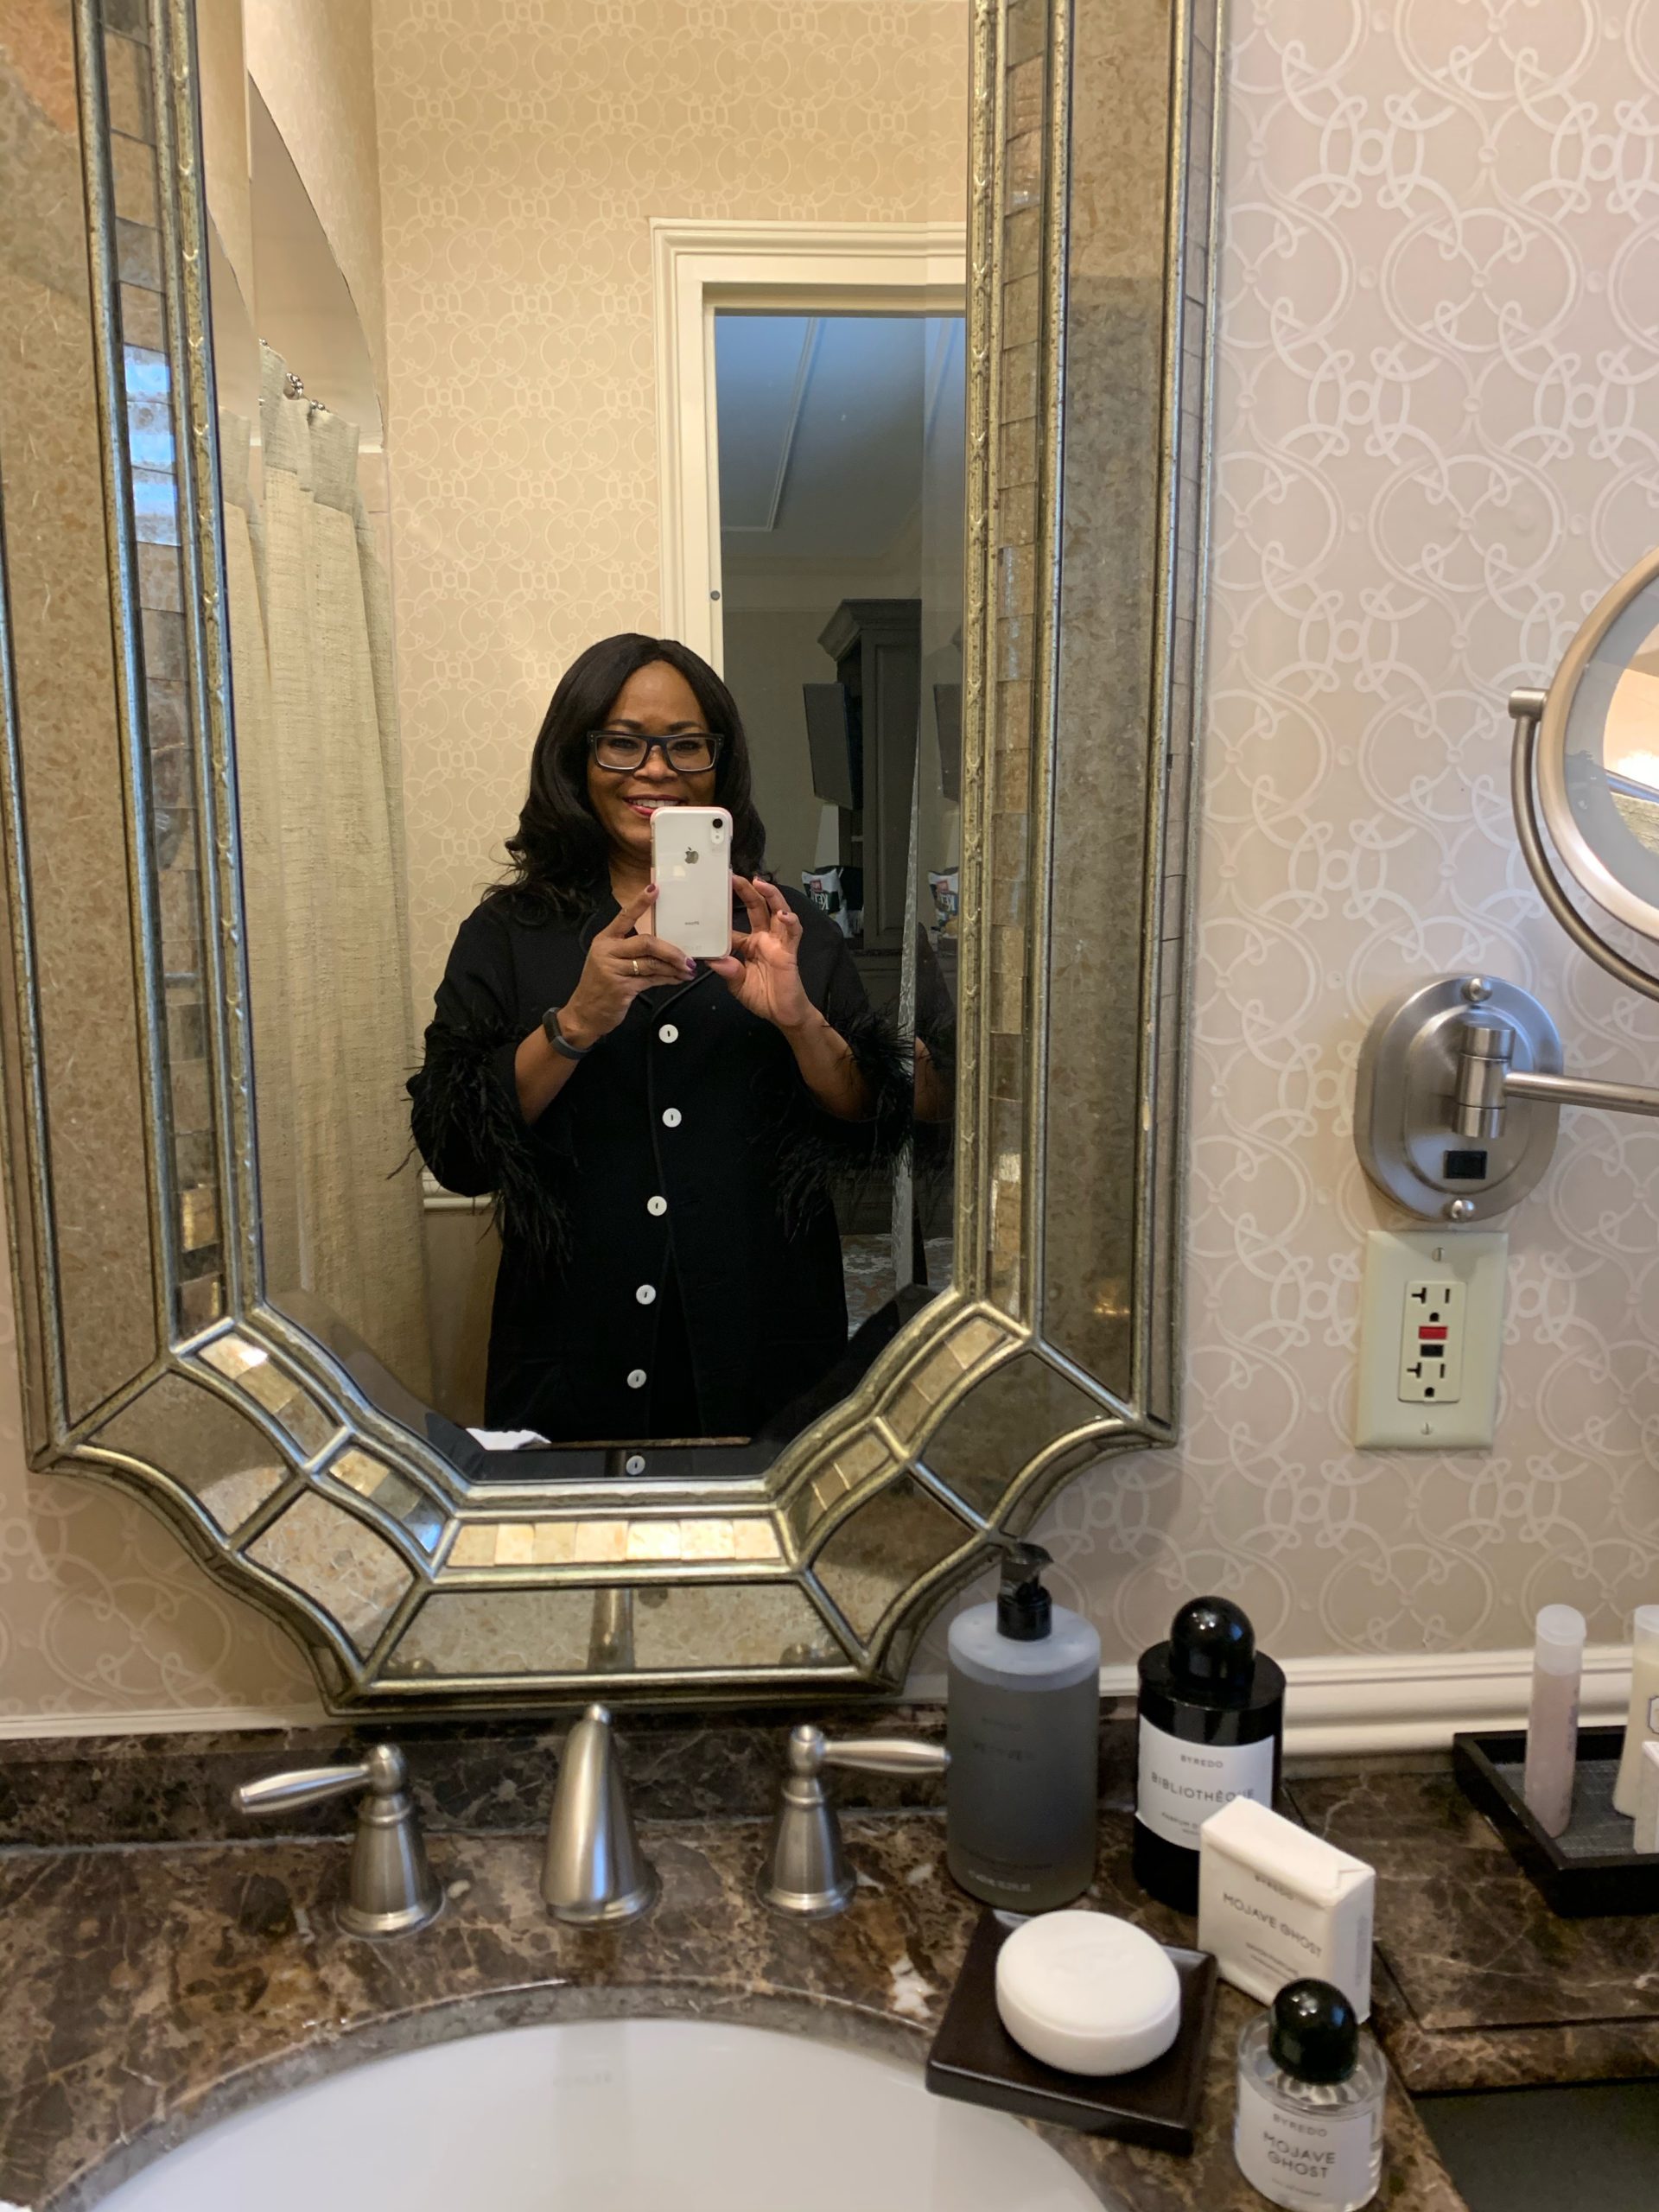 Byredo Bath and Body Products; Bathroom Selfie at The Hotel Hershey